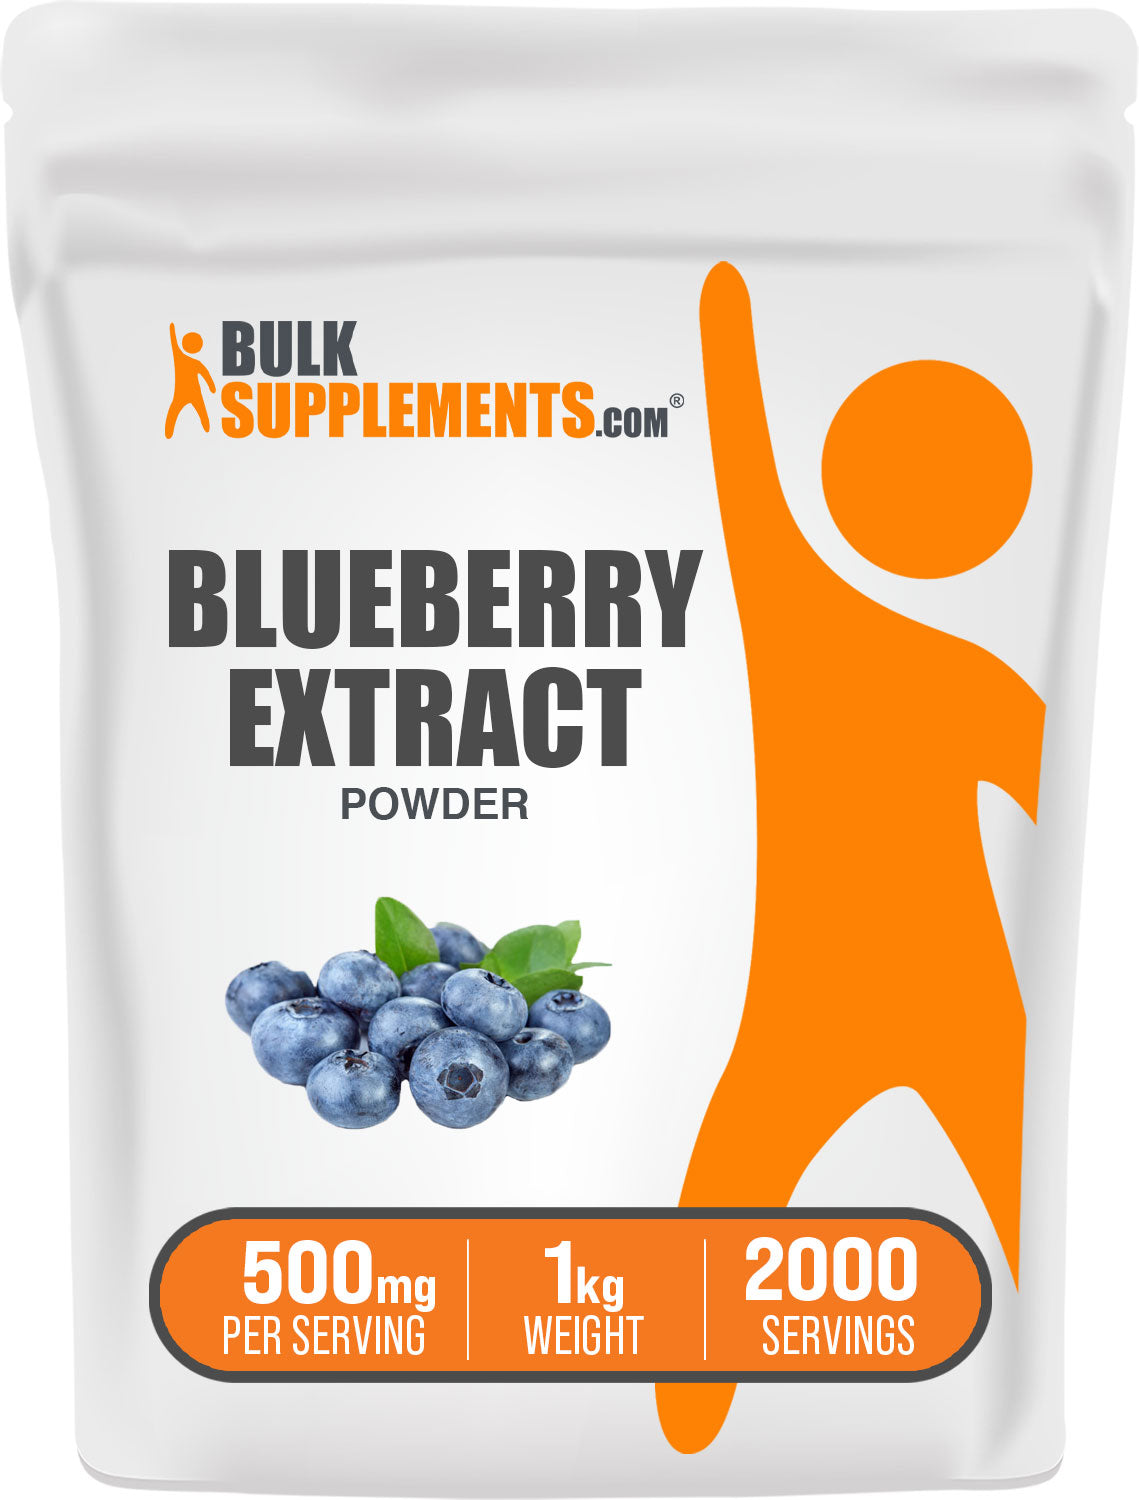 1kg of blueberry powder